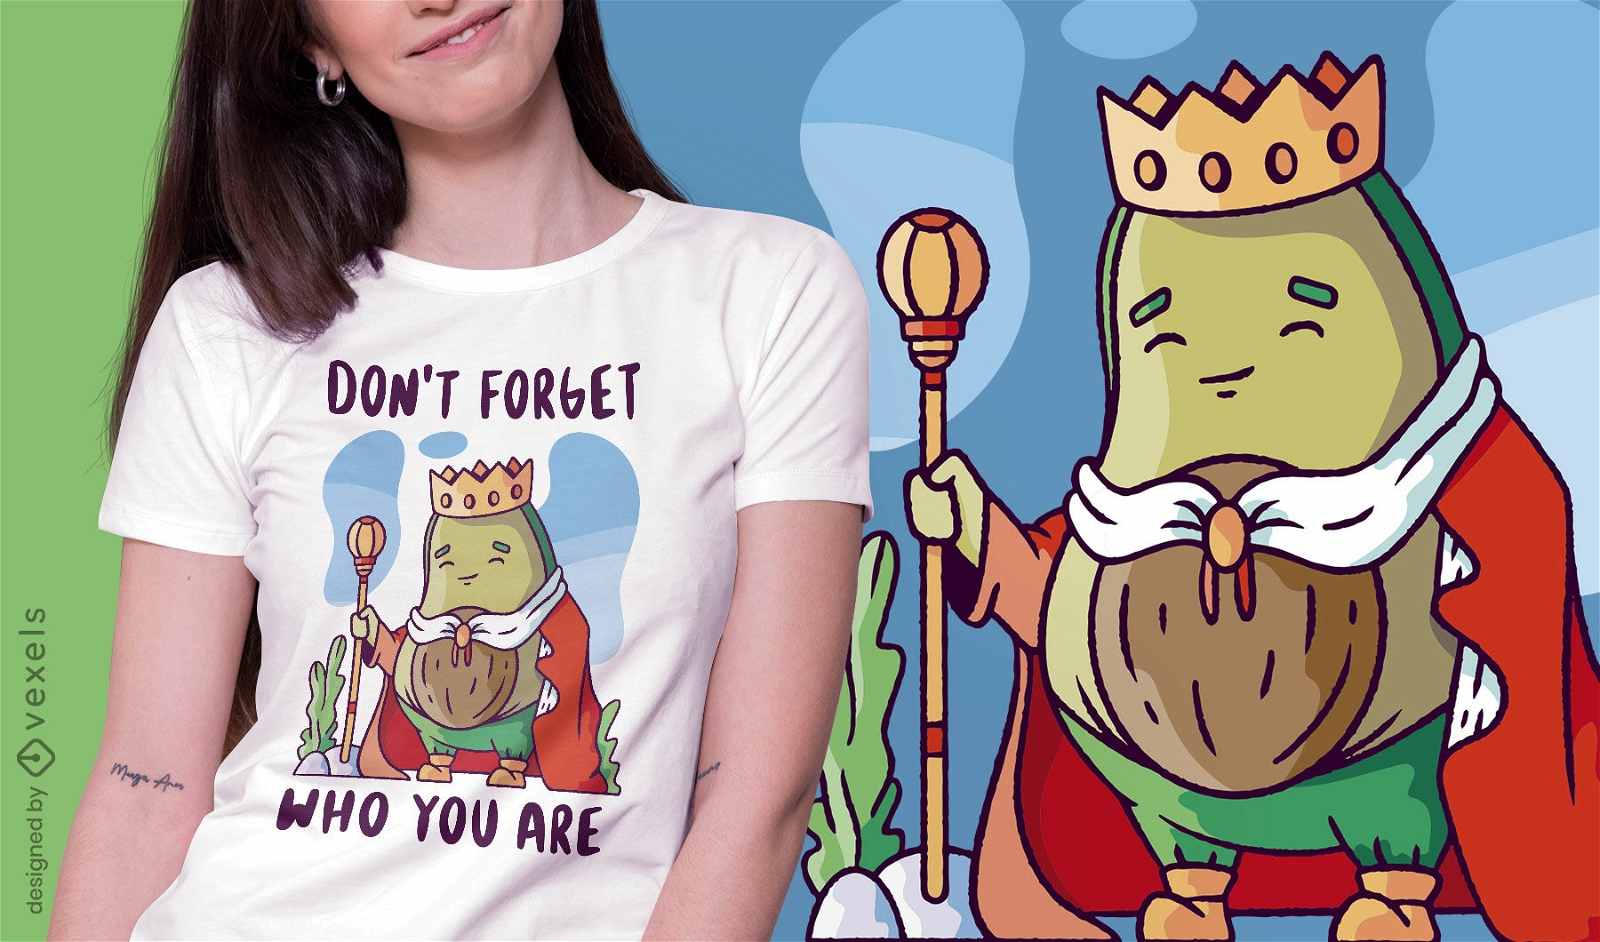 Mittelalterliches Avocado-K?nig-T-Shirt-Design